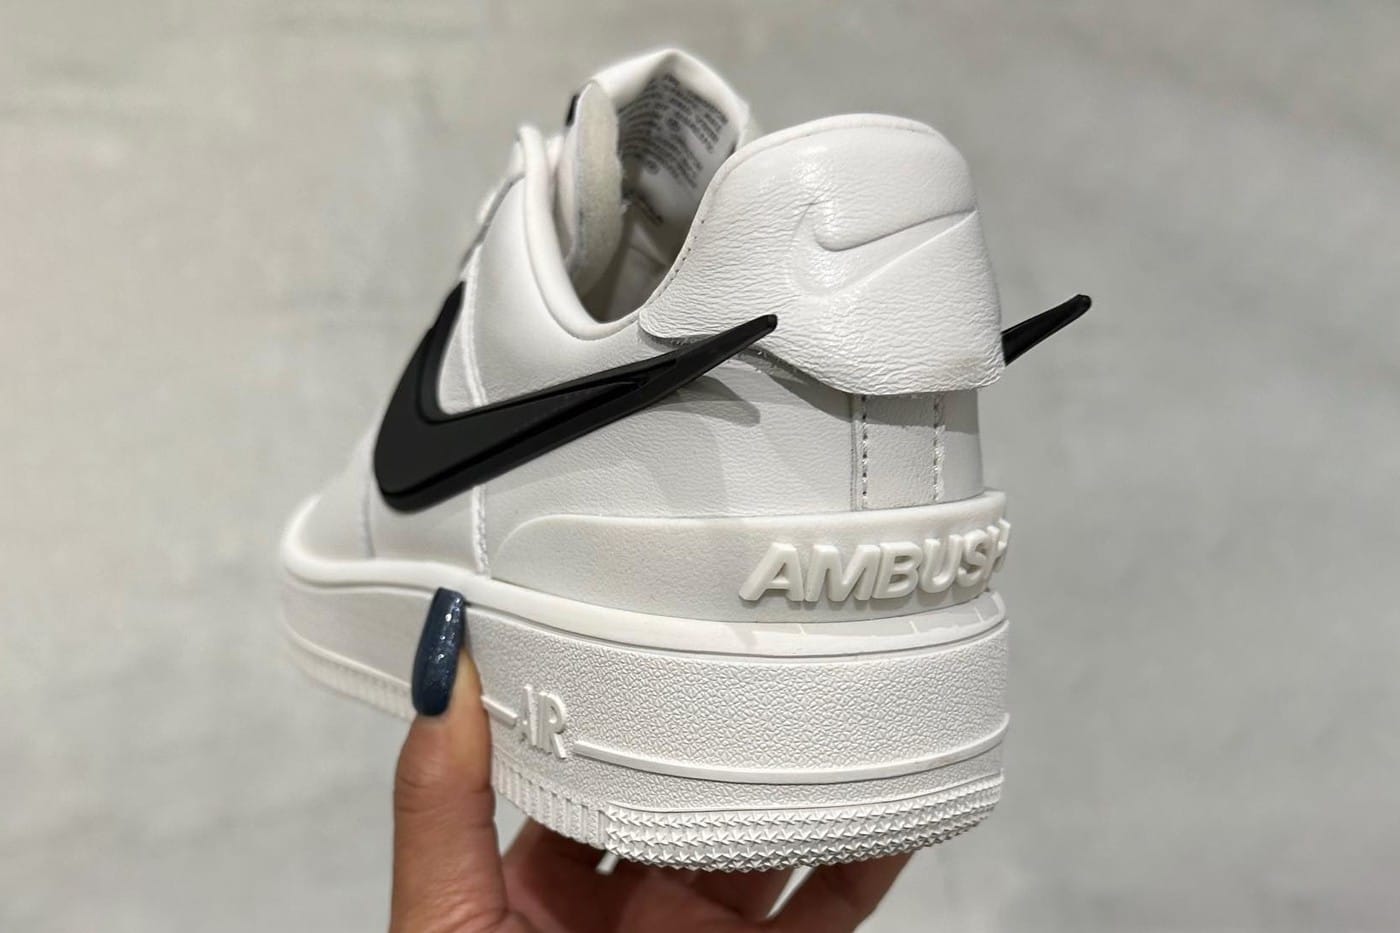 AMBUSH x Nike Air Force 1 